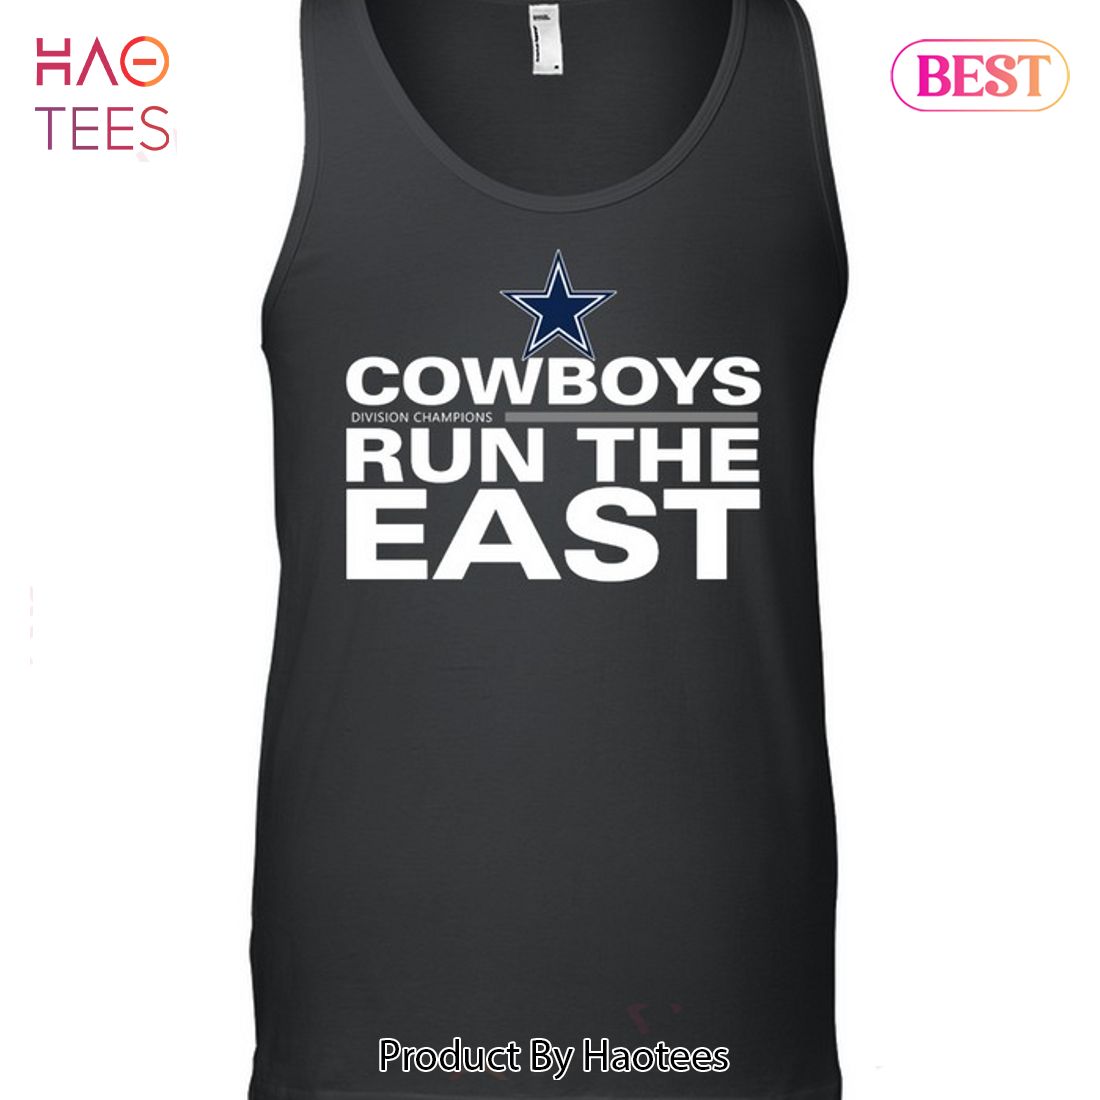 Cowboys Run The NFL East T-Shirt